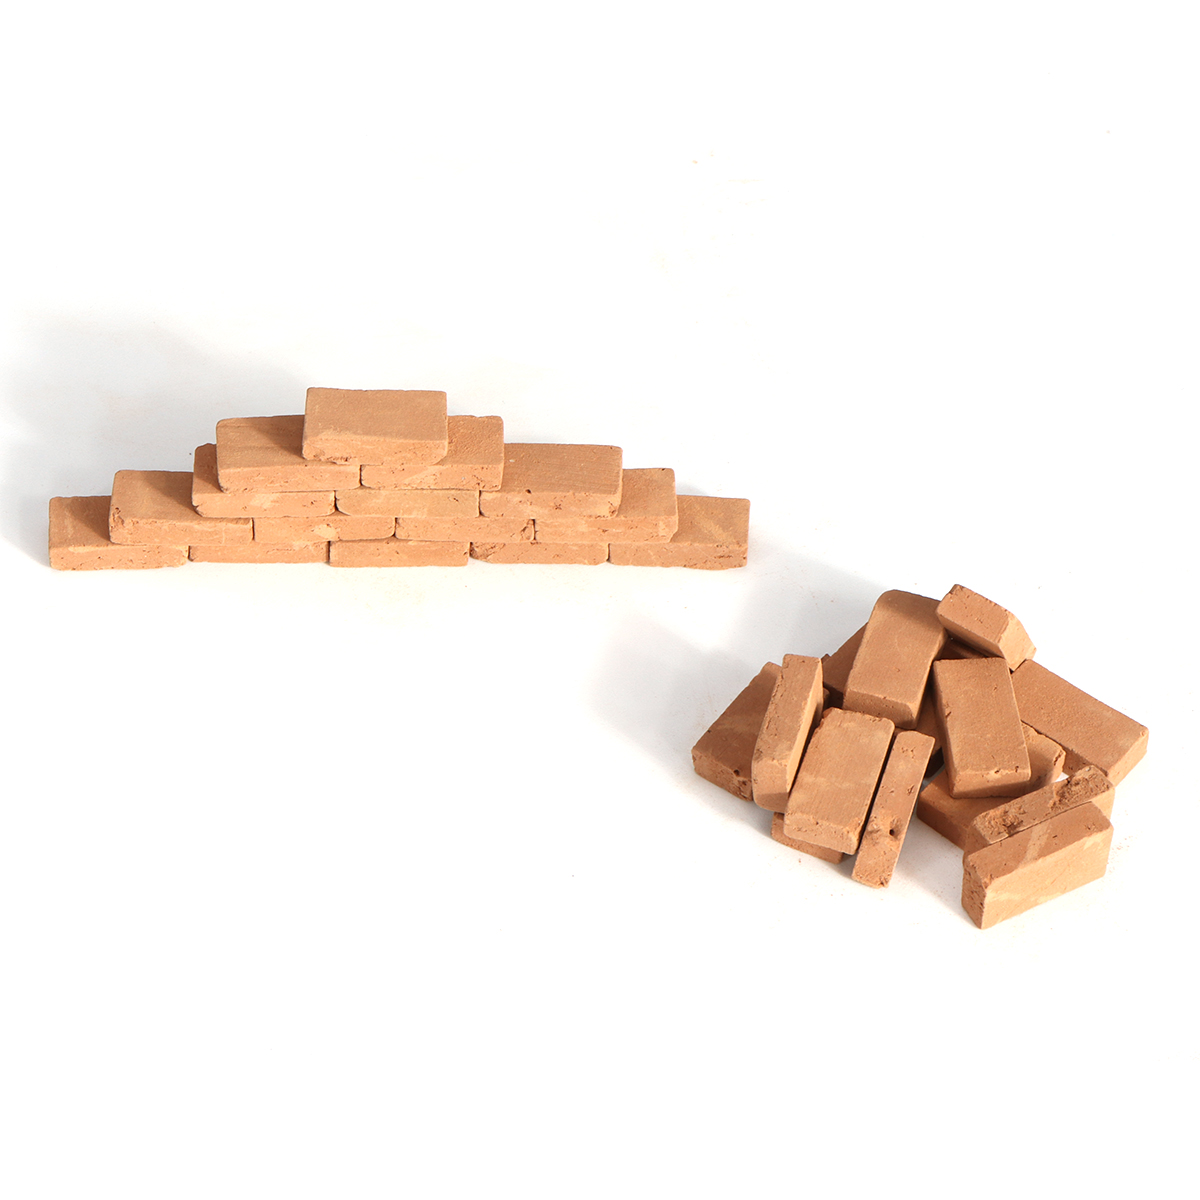 Miniature-Simulation-Model-Brick-Tiles-DIY-Handmade-Sand-Table-Building-Landscape-Decoration-Tool-1559359-8